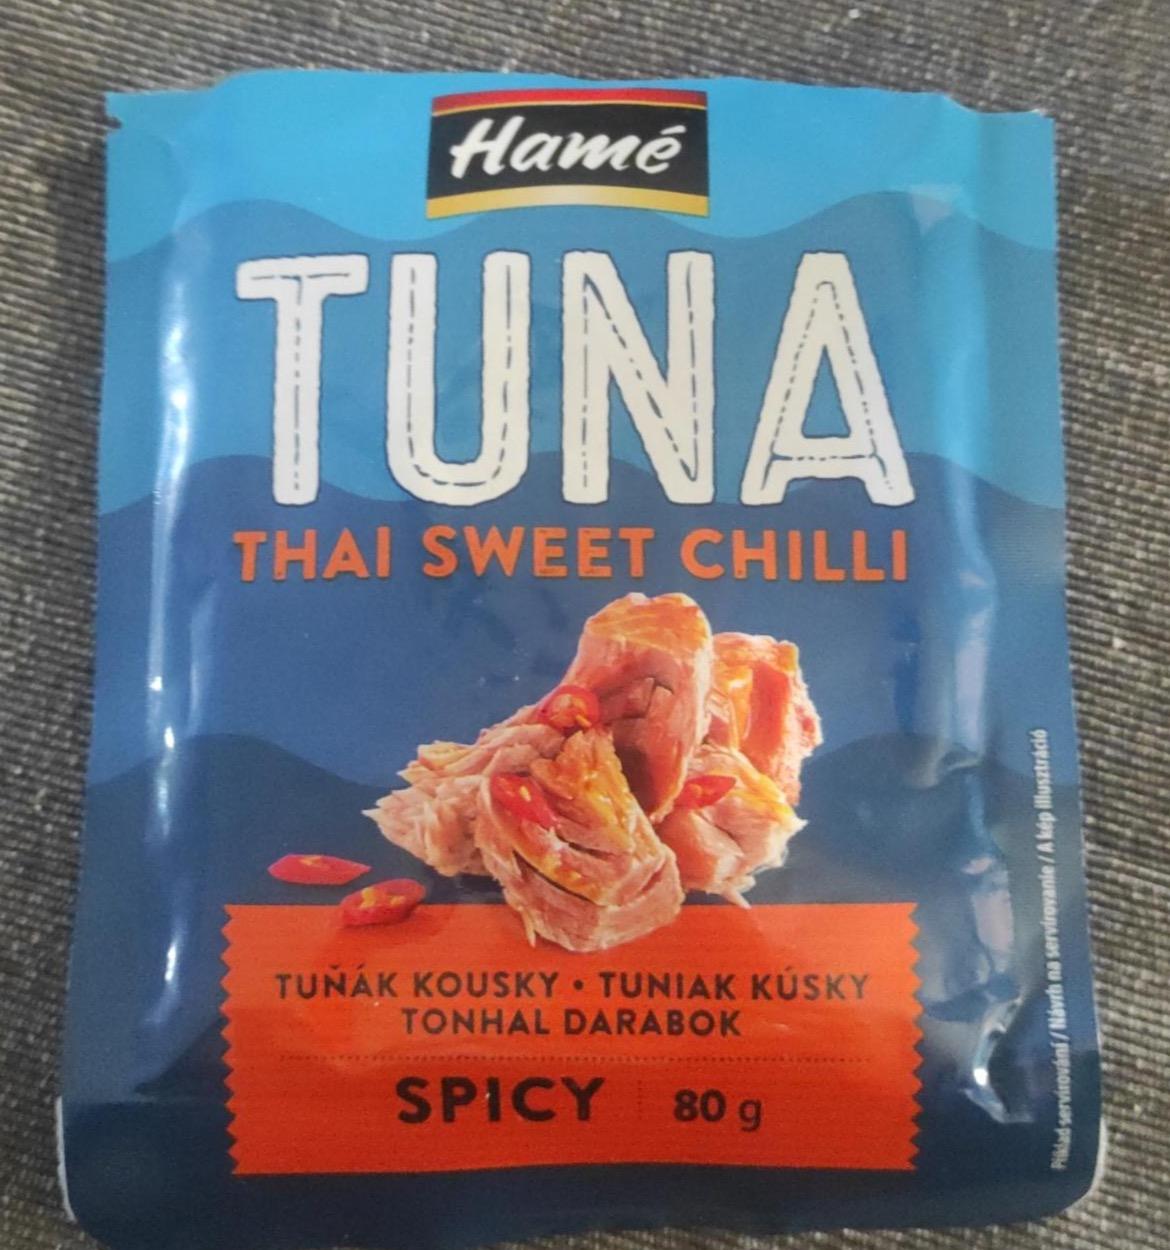 Képek - Tuna thai sweet chilli Spicy Hamé